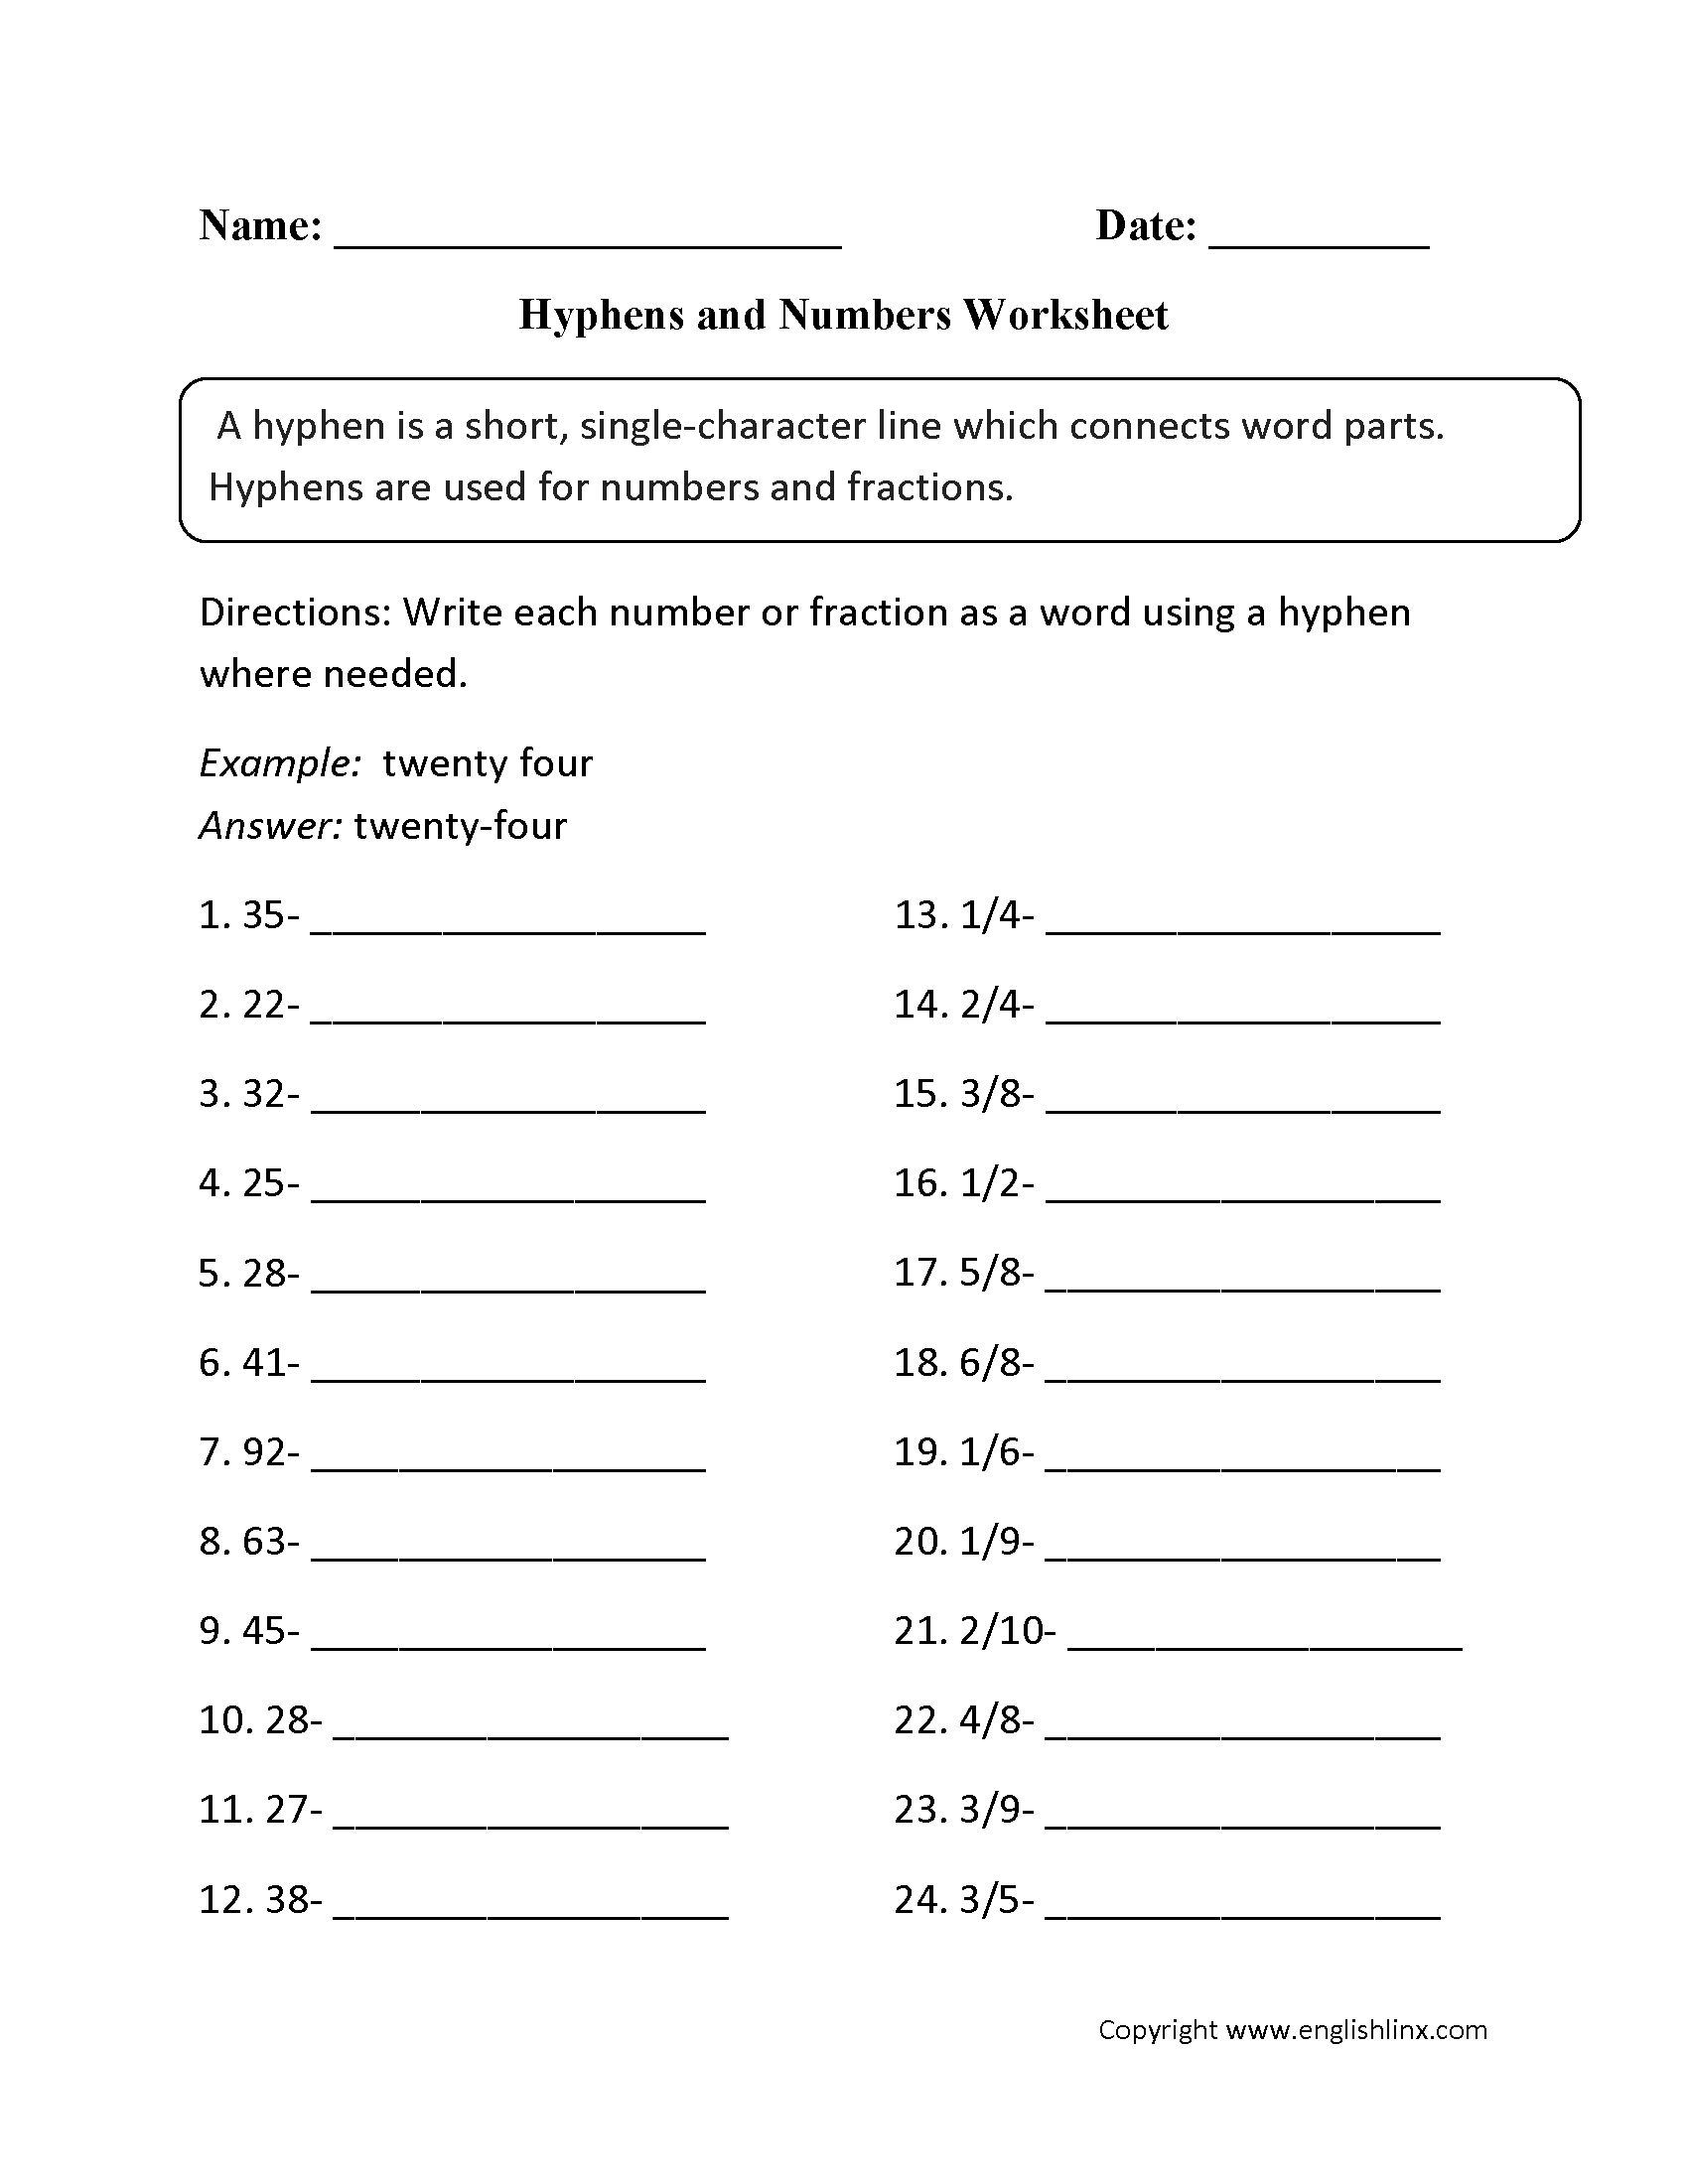 Hyphens and Numbers Worksheet